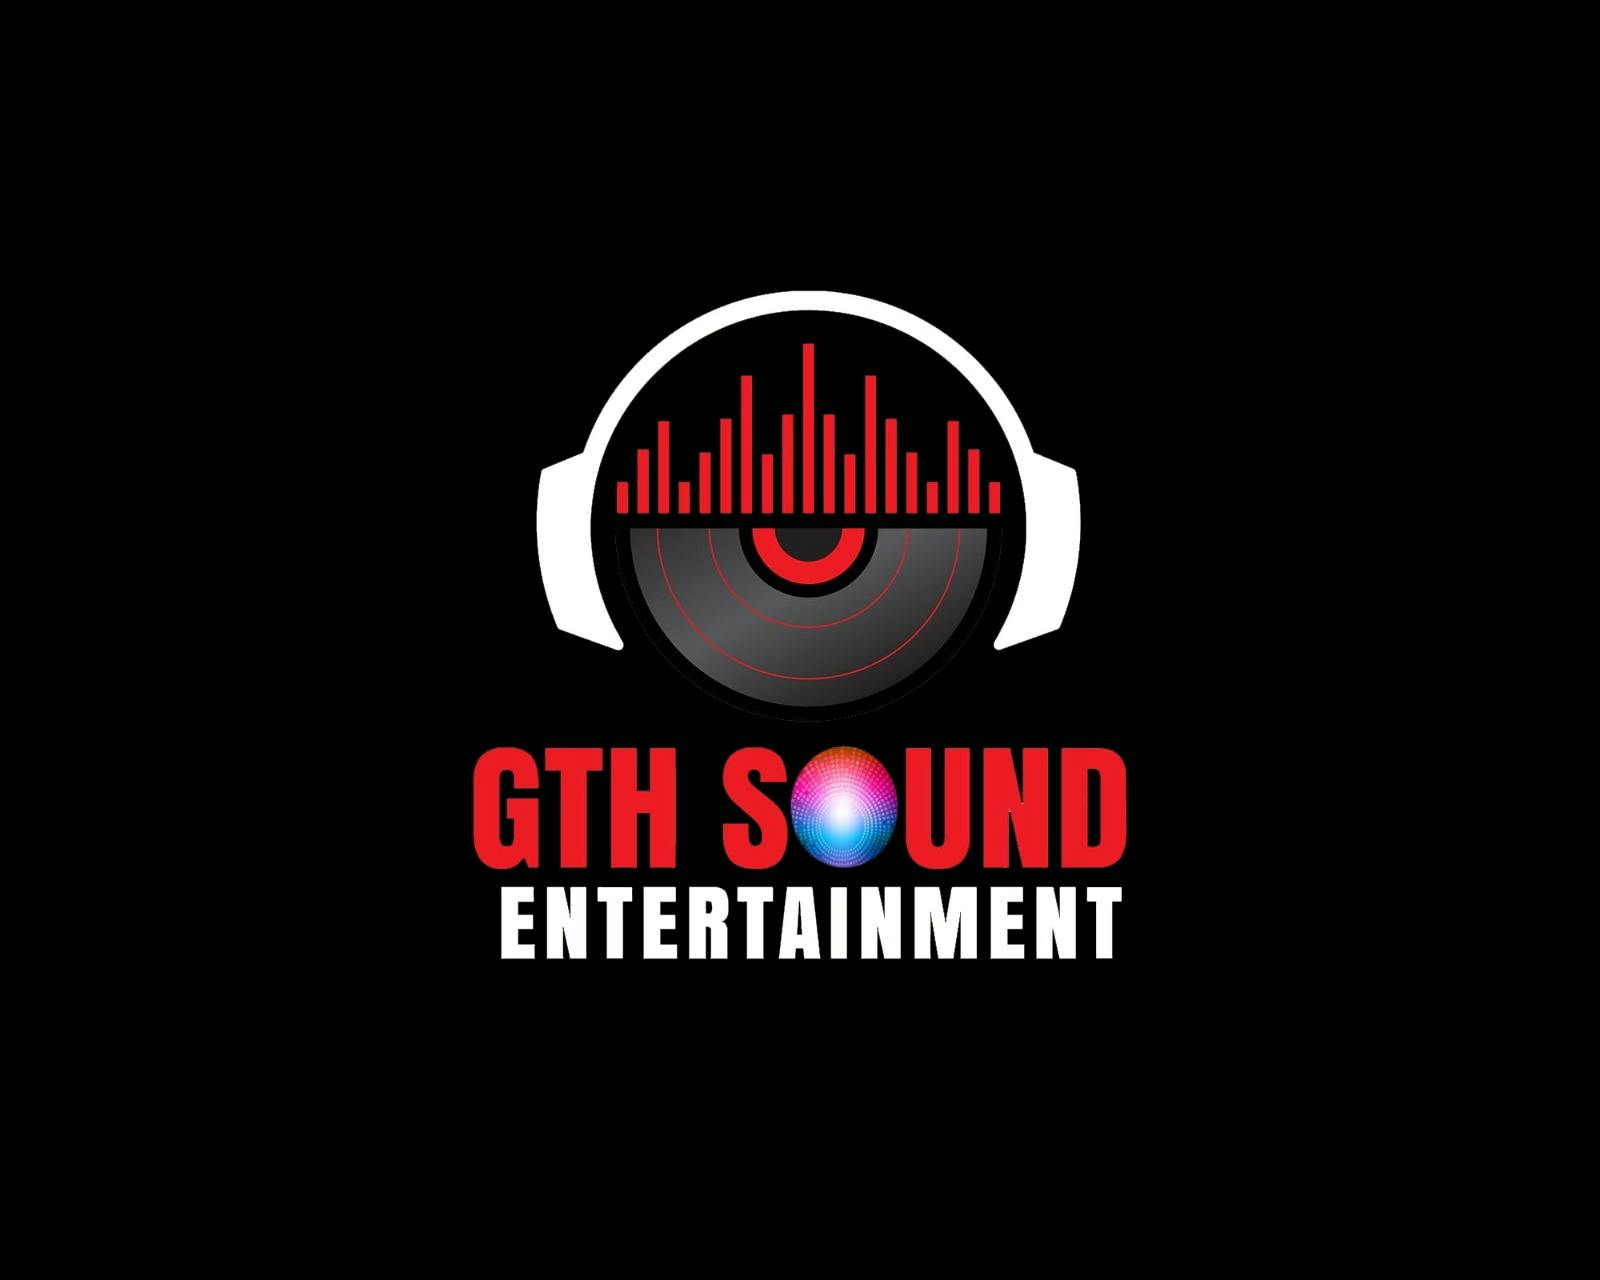 Gth sound entertainment Harris